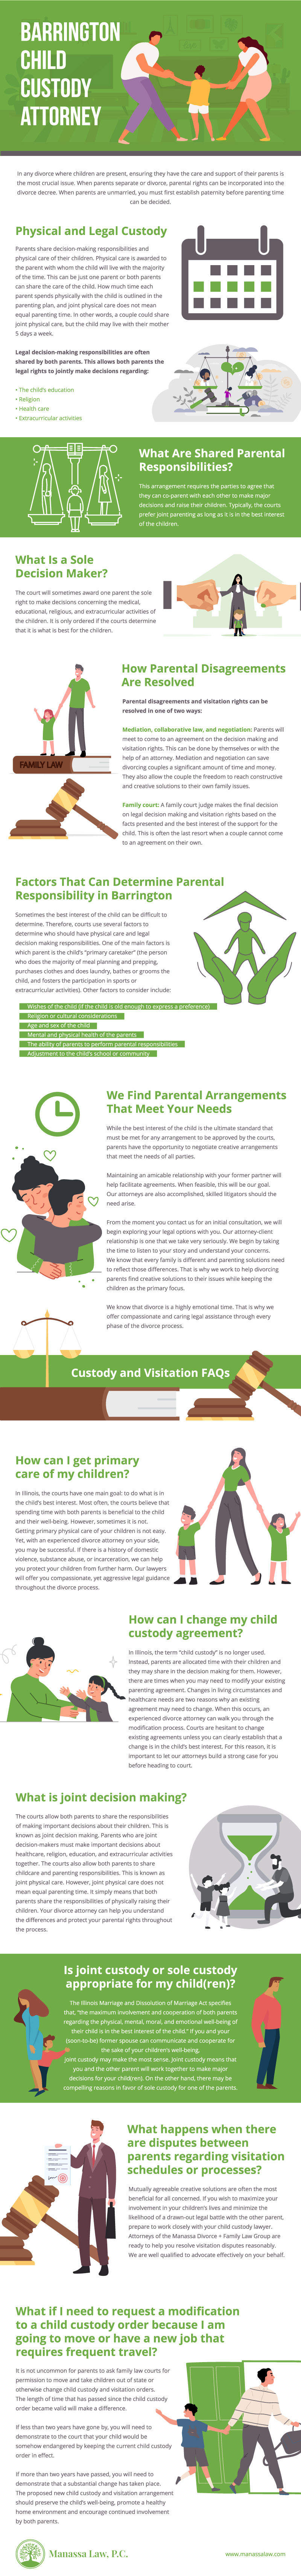 Manassa Law Child Custody Infographic